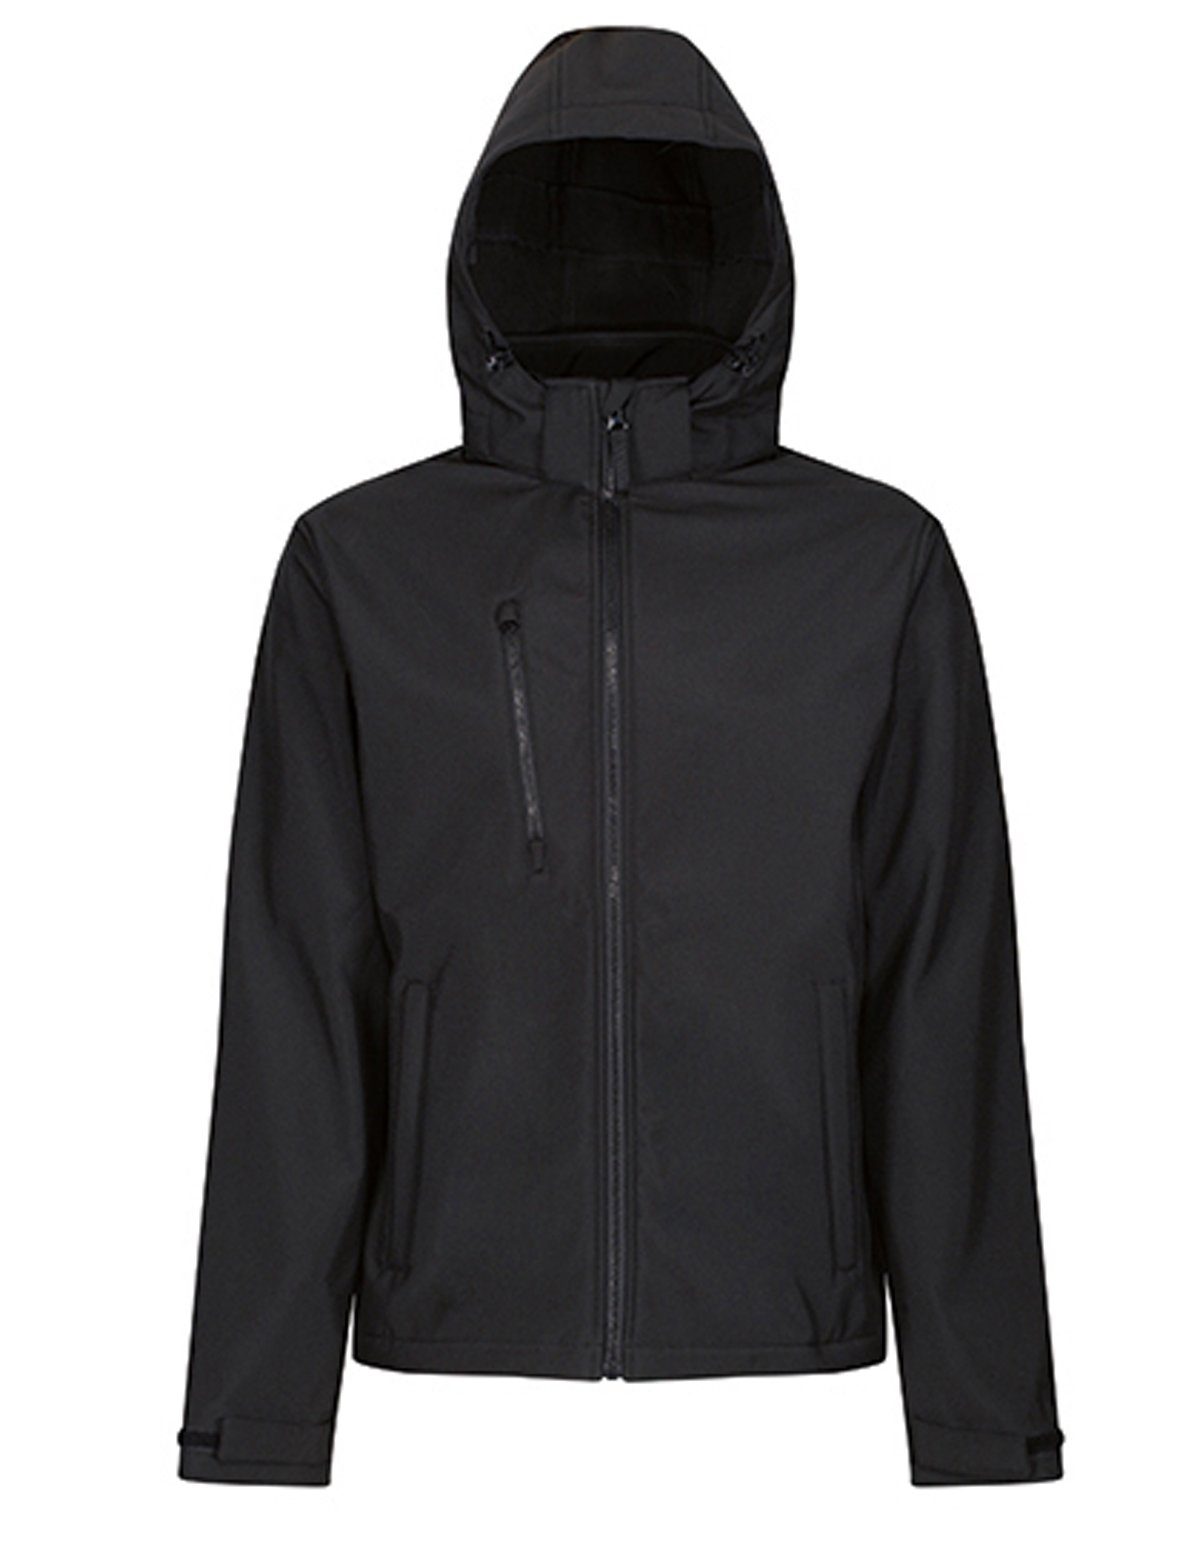 Regatta Professional Softshelljacke Venturer 3-layer Black-Black Hooded Jacket Printable Softshell RG701